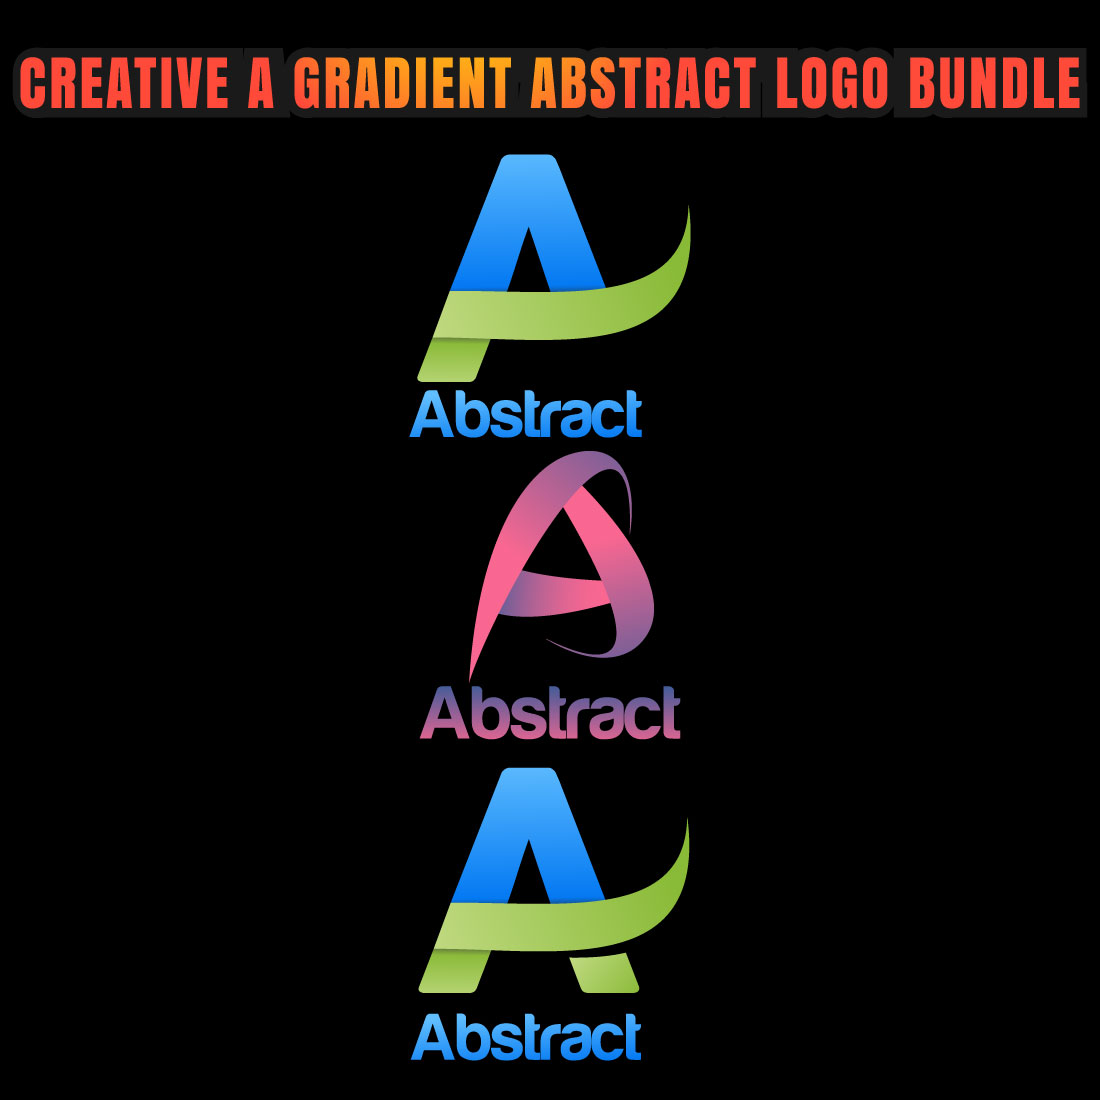 9 Creative A Gradient Abstract Logo Bundle facebook image.